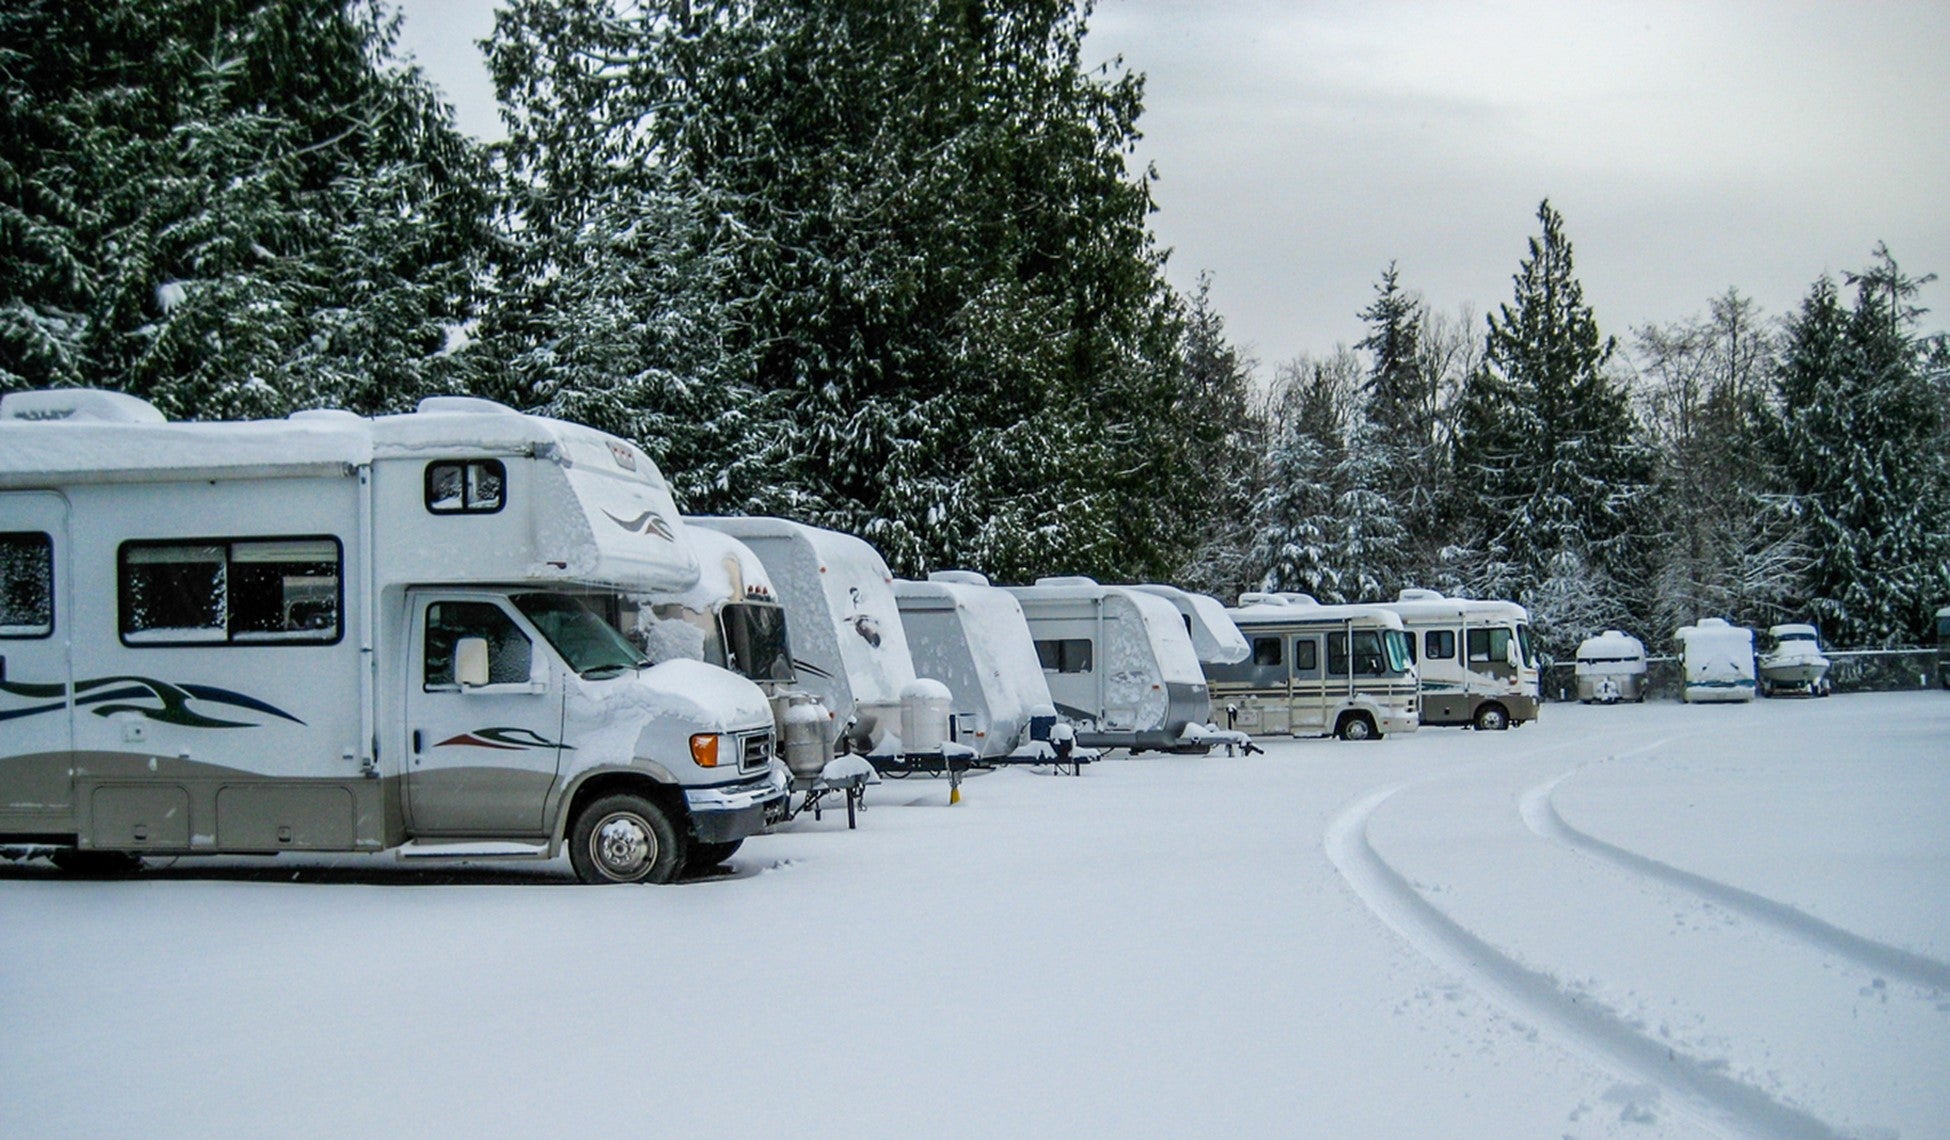 Winterizing your RV/Camper - Tips & Tricks